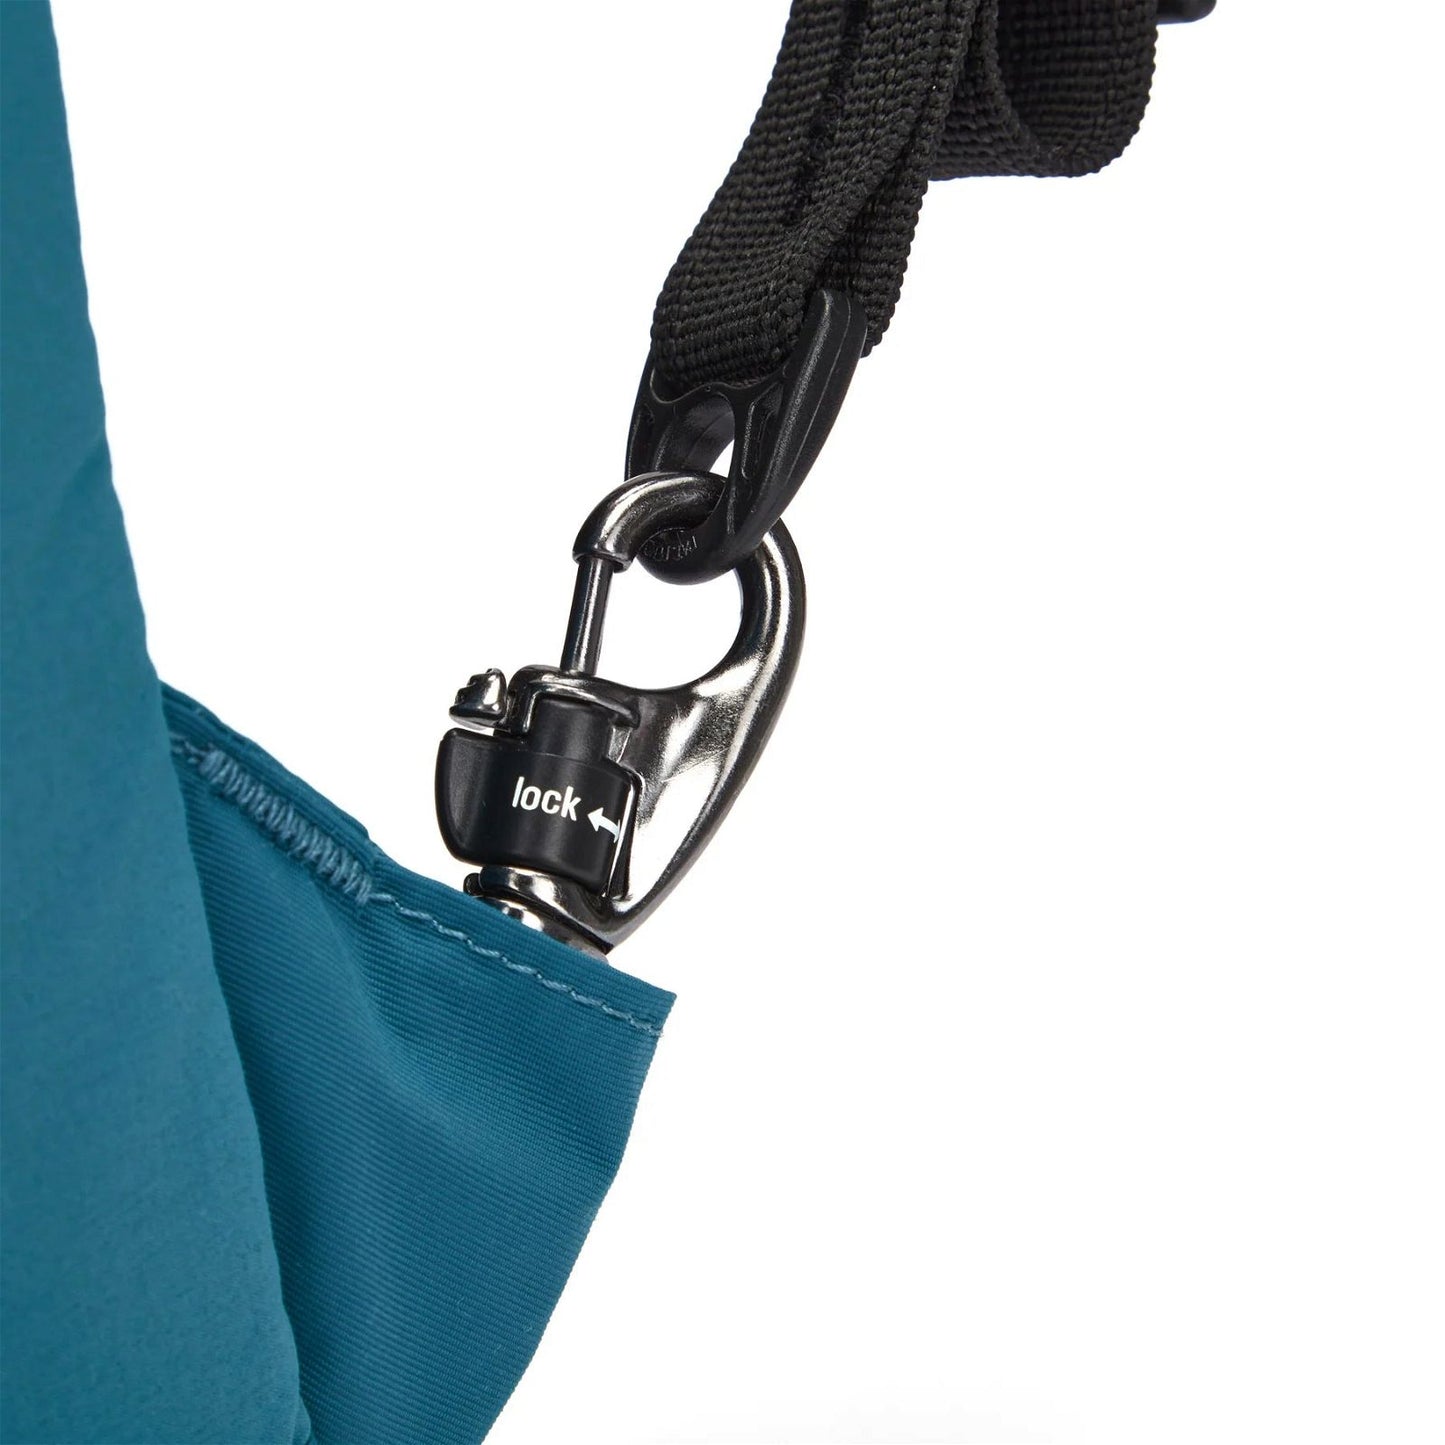 Pacsafe Metrosafe LS450 Econyl Backpack - rainbowbags